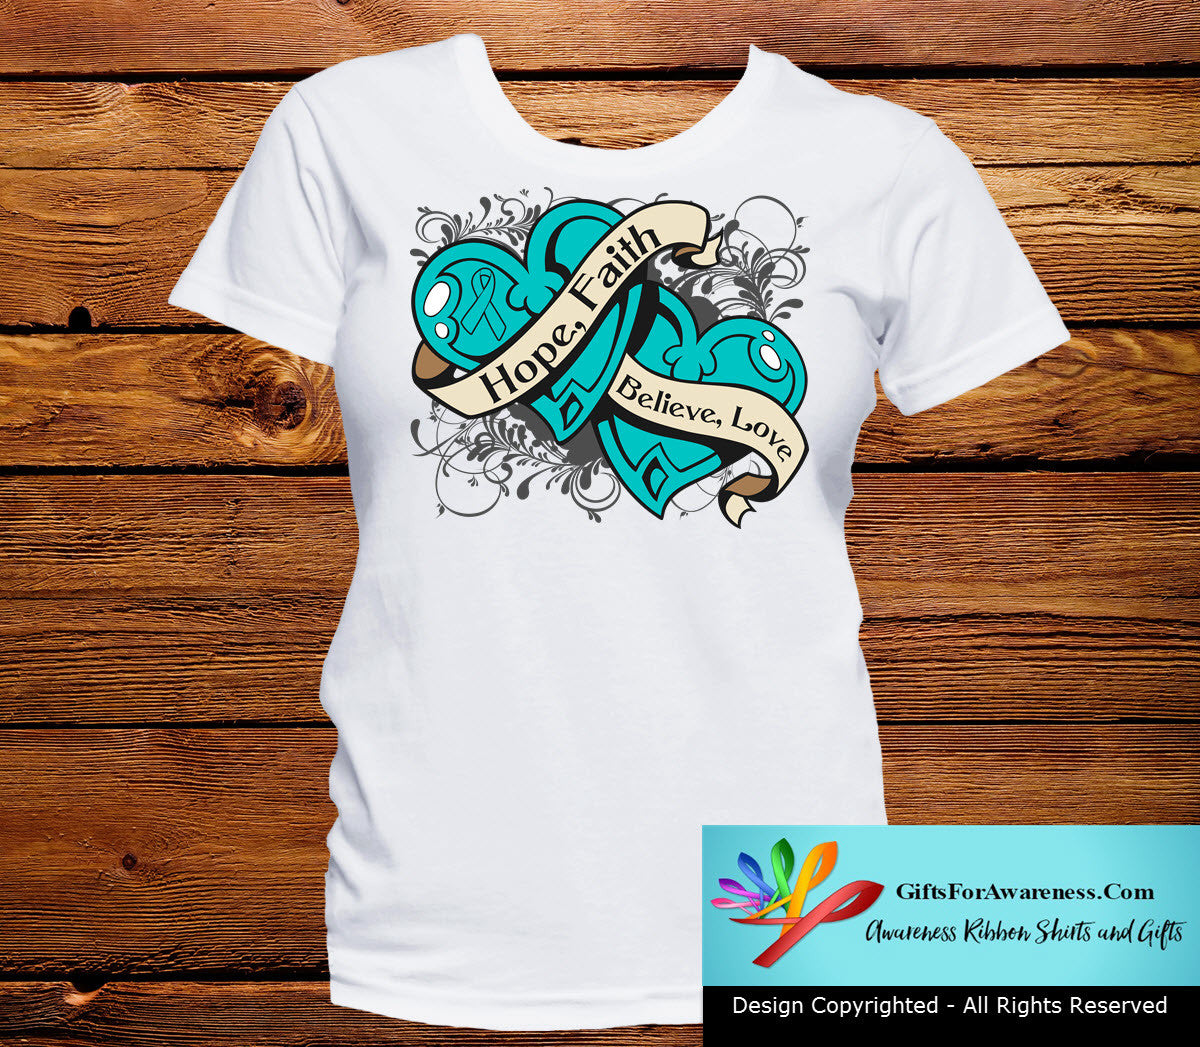 Gynecologic Cancer Hope Believe Faith Love Shirts - GiftsForAwareness